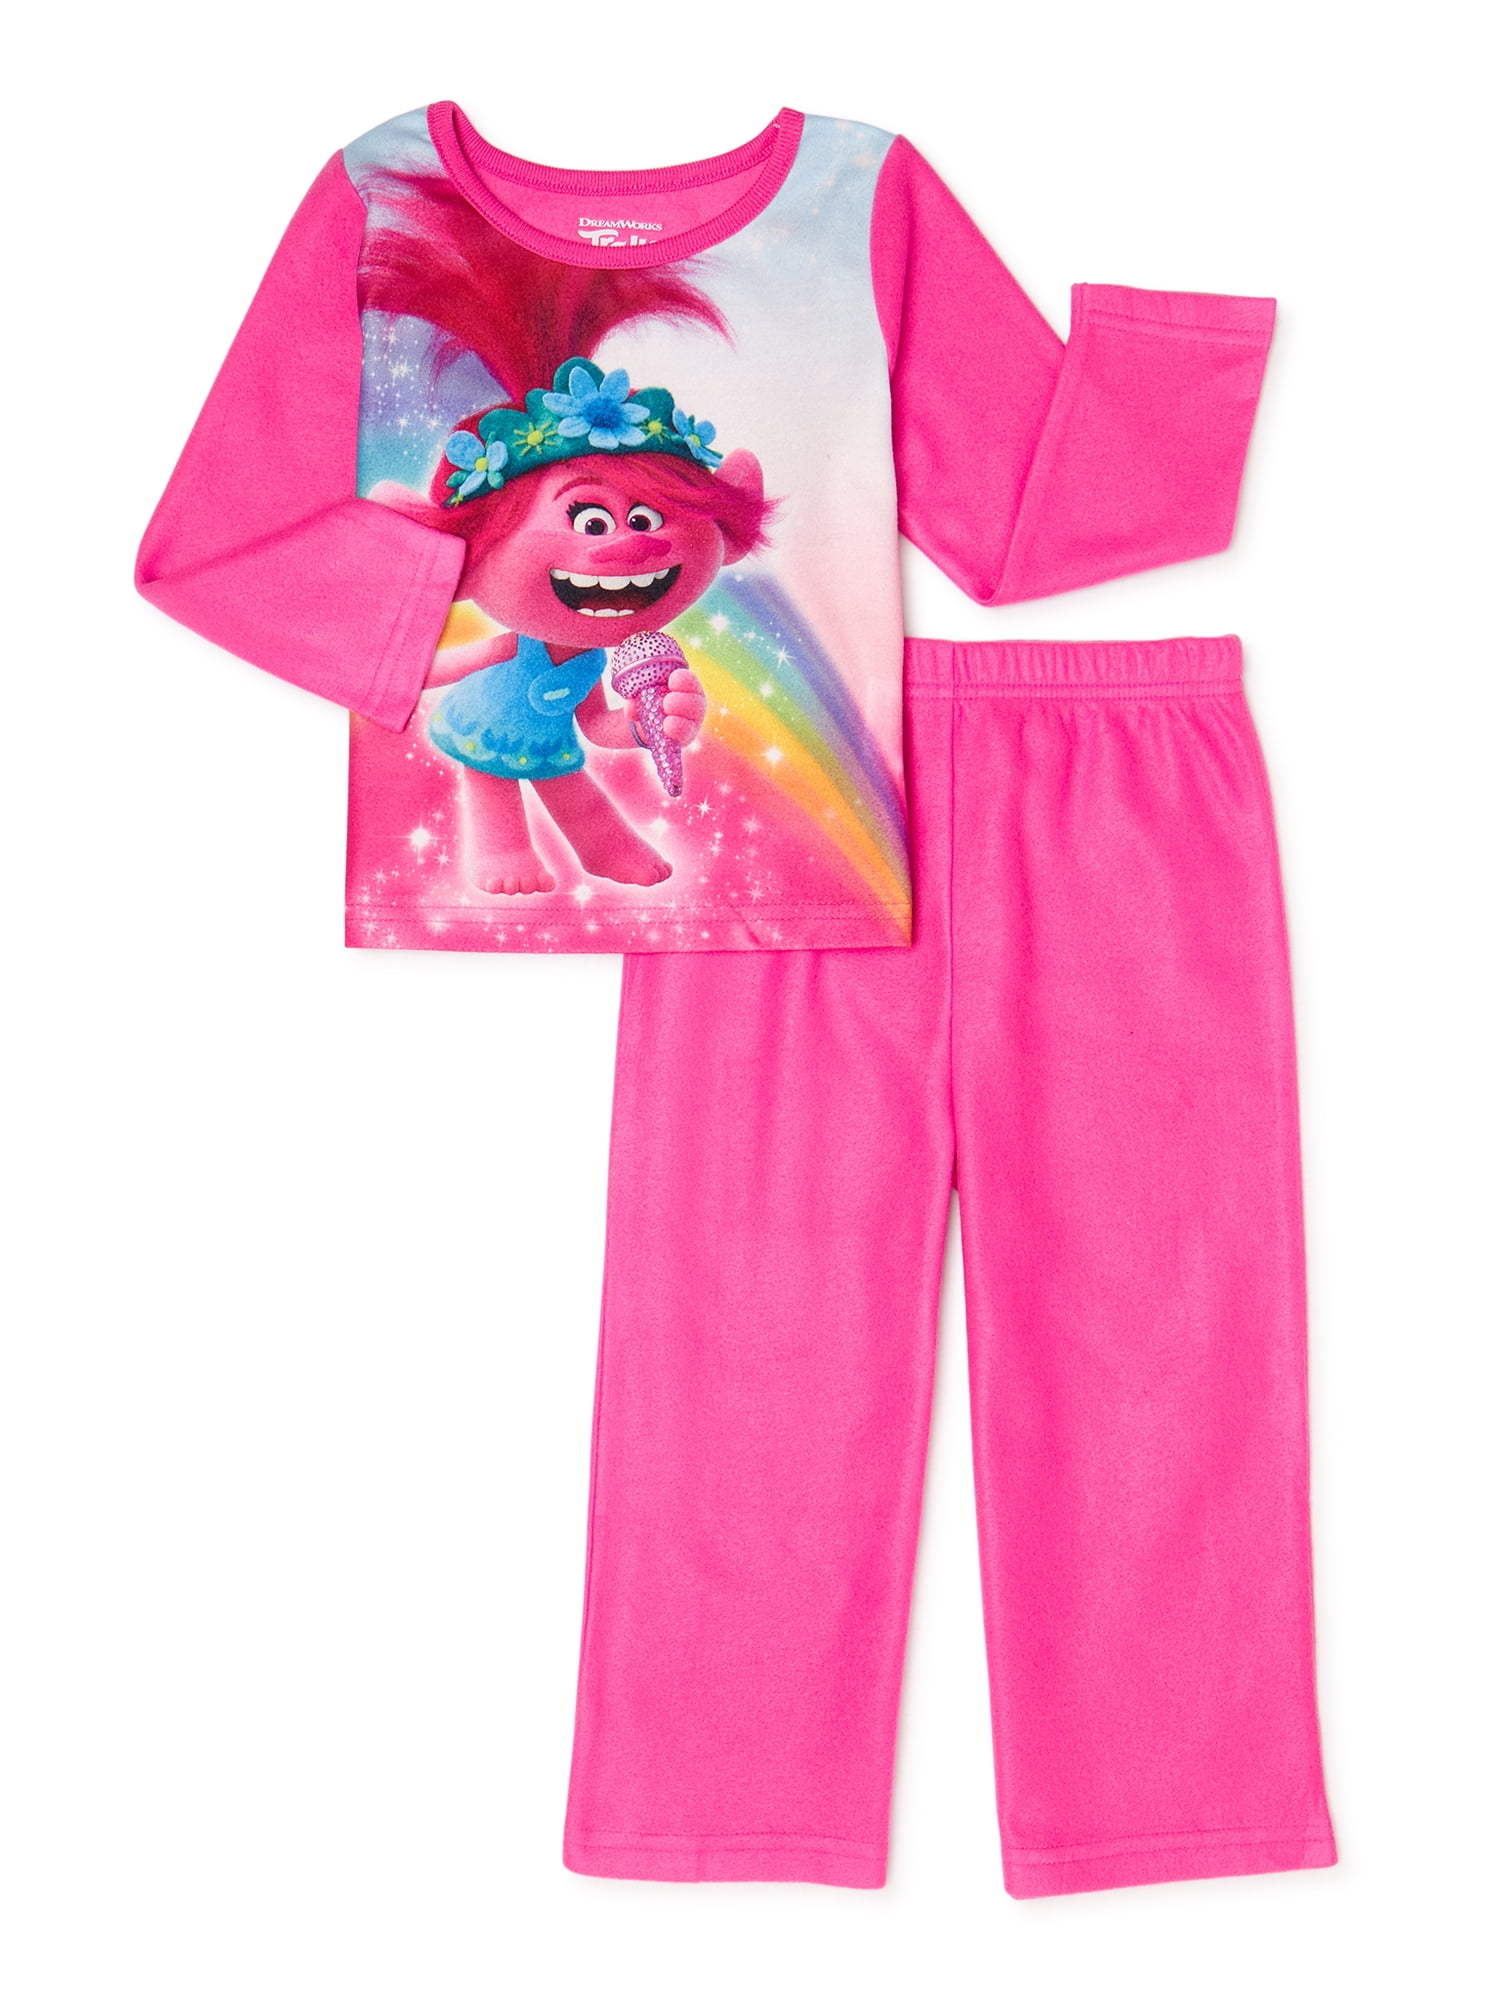 Best Deals Online Thombase Girl Pajamas Set Kids Cute Flower Cartoon ...